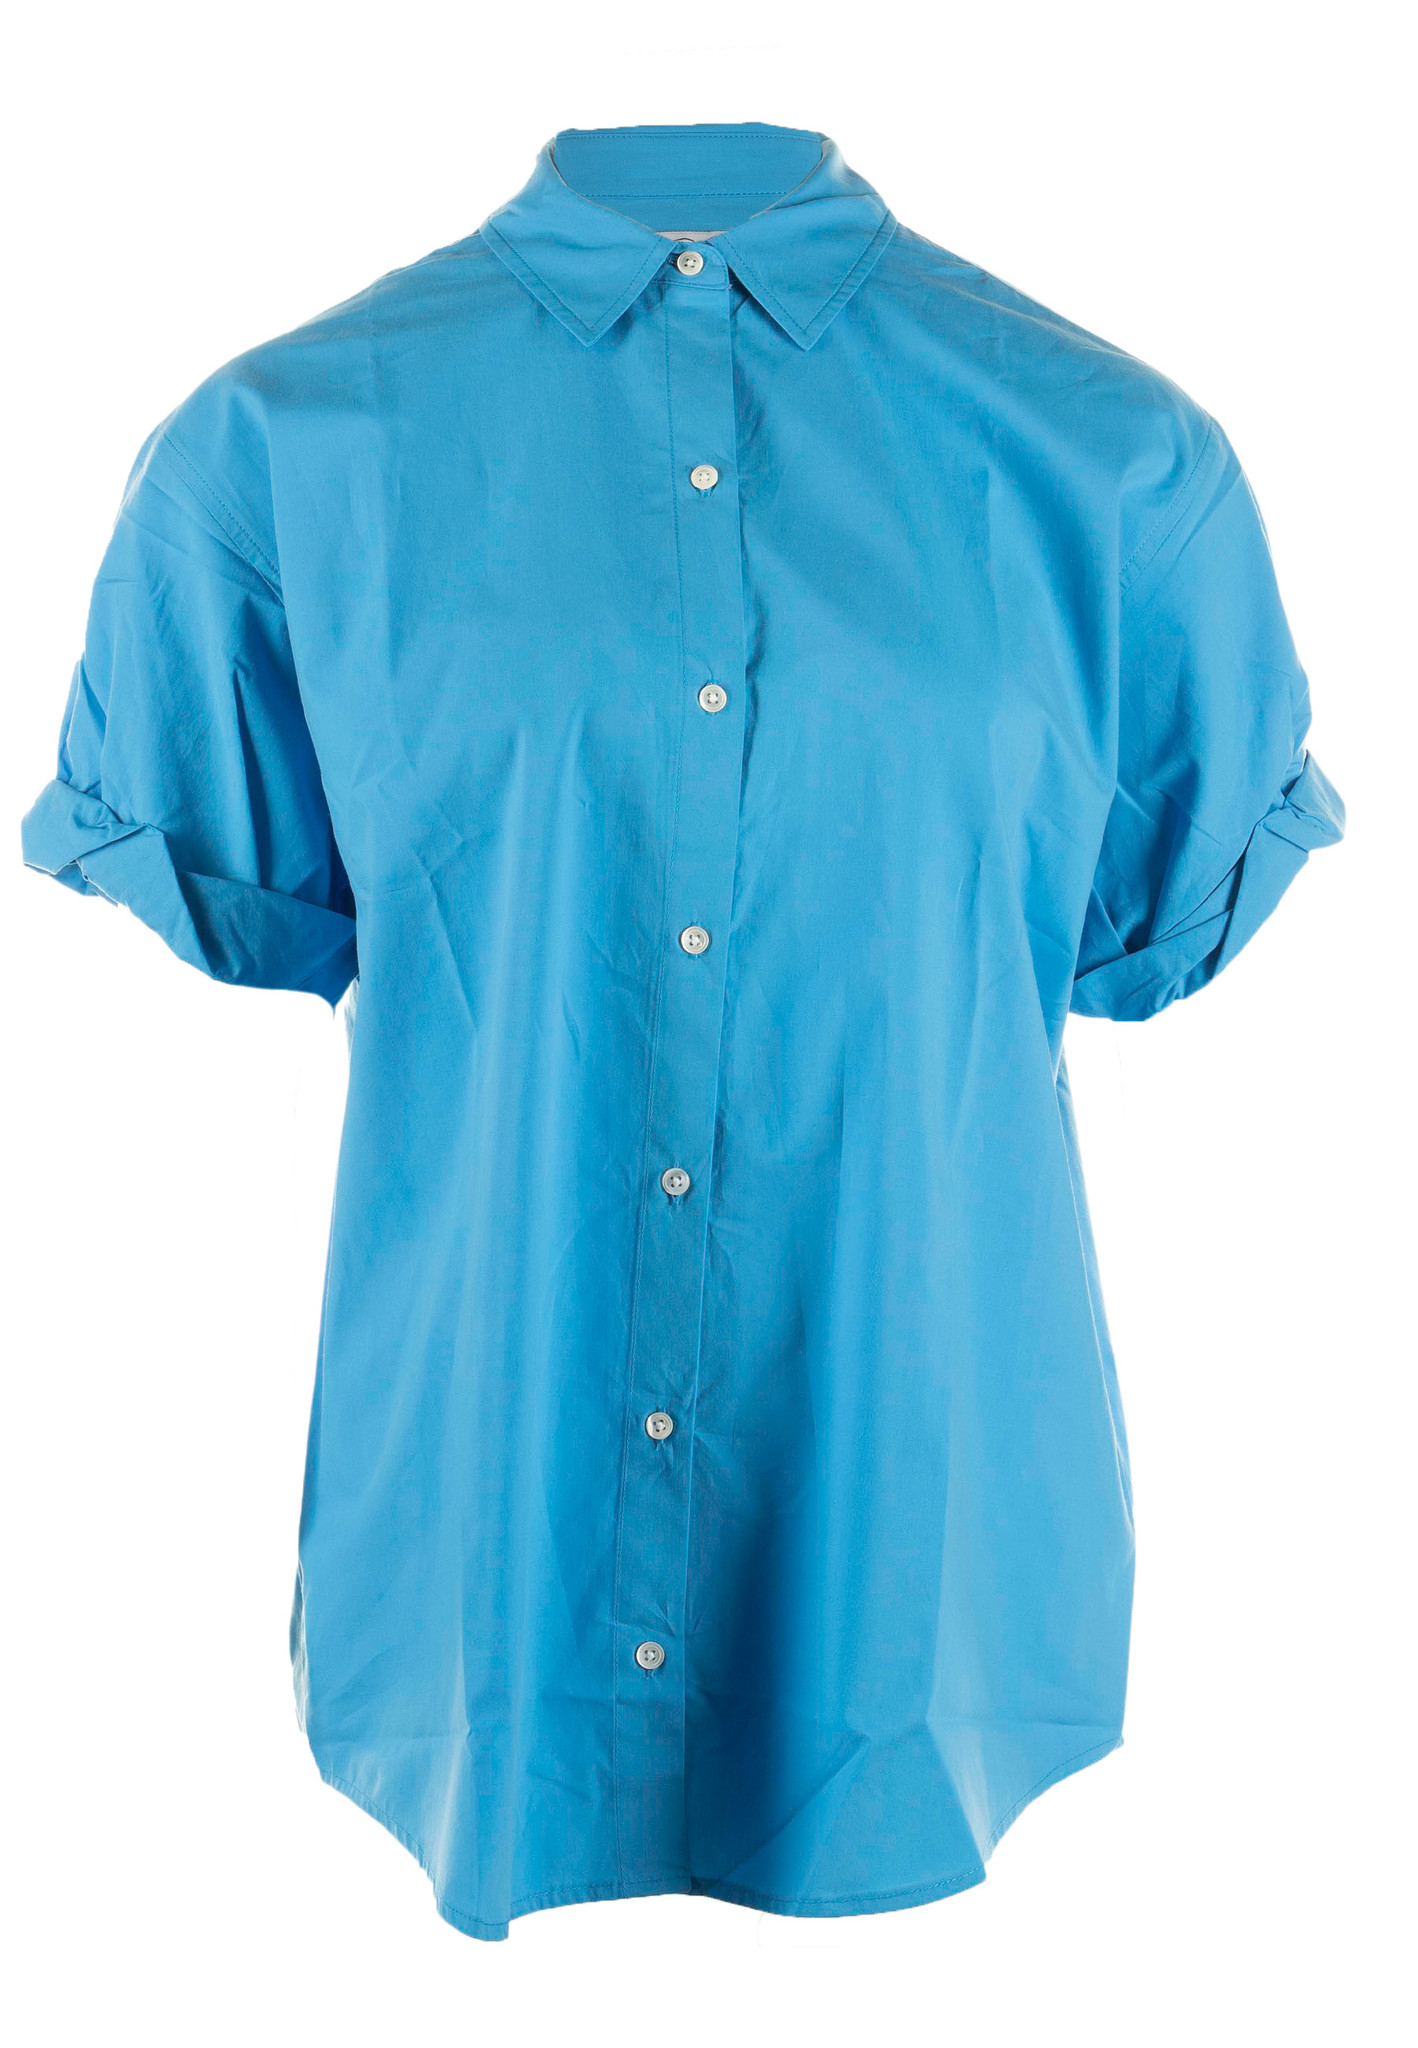 Rails 670-568-434 blouses blauw Dames maat S